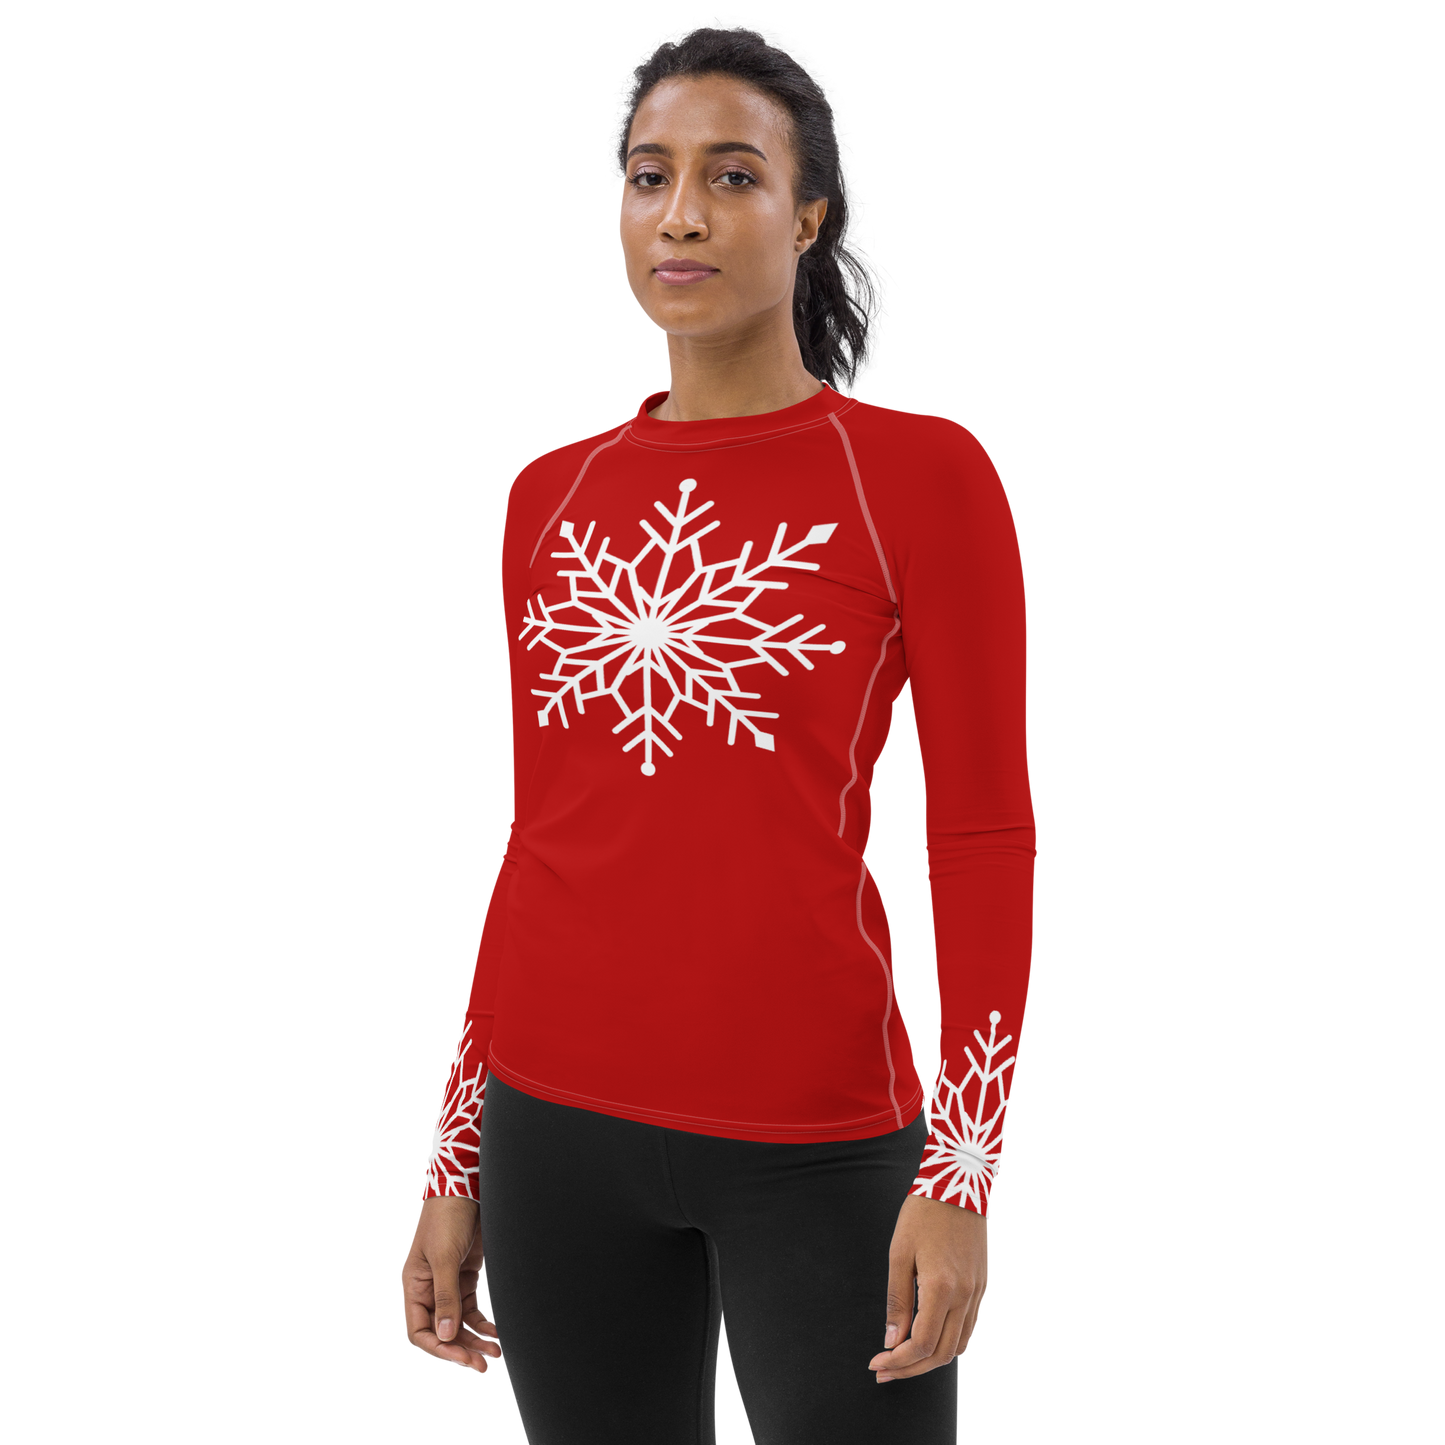 Winter Snowflake Top, White Snowflake on Dark Red Women's Rash Guard, Holiday Top